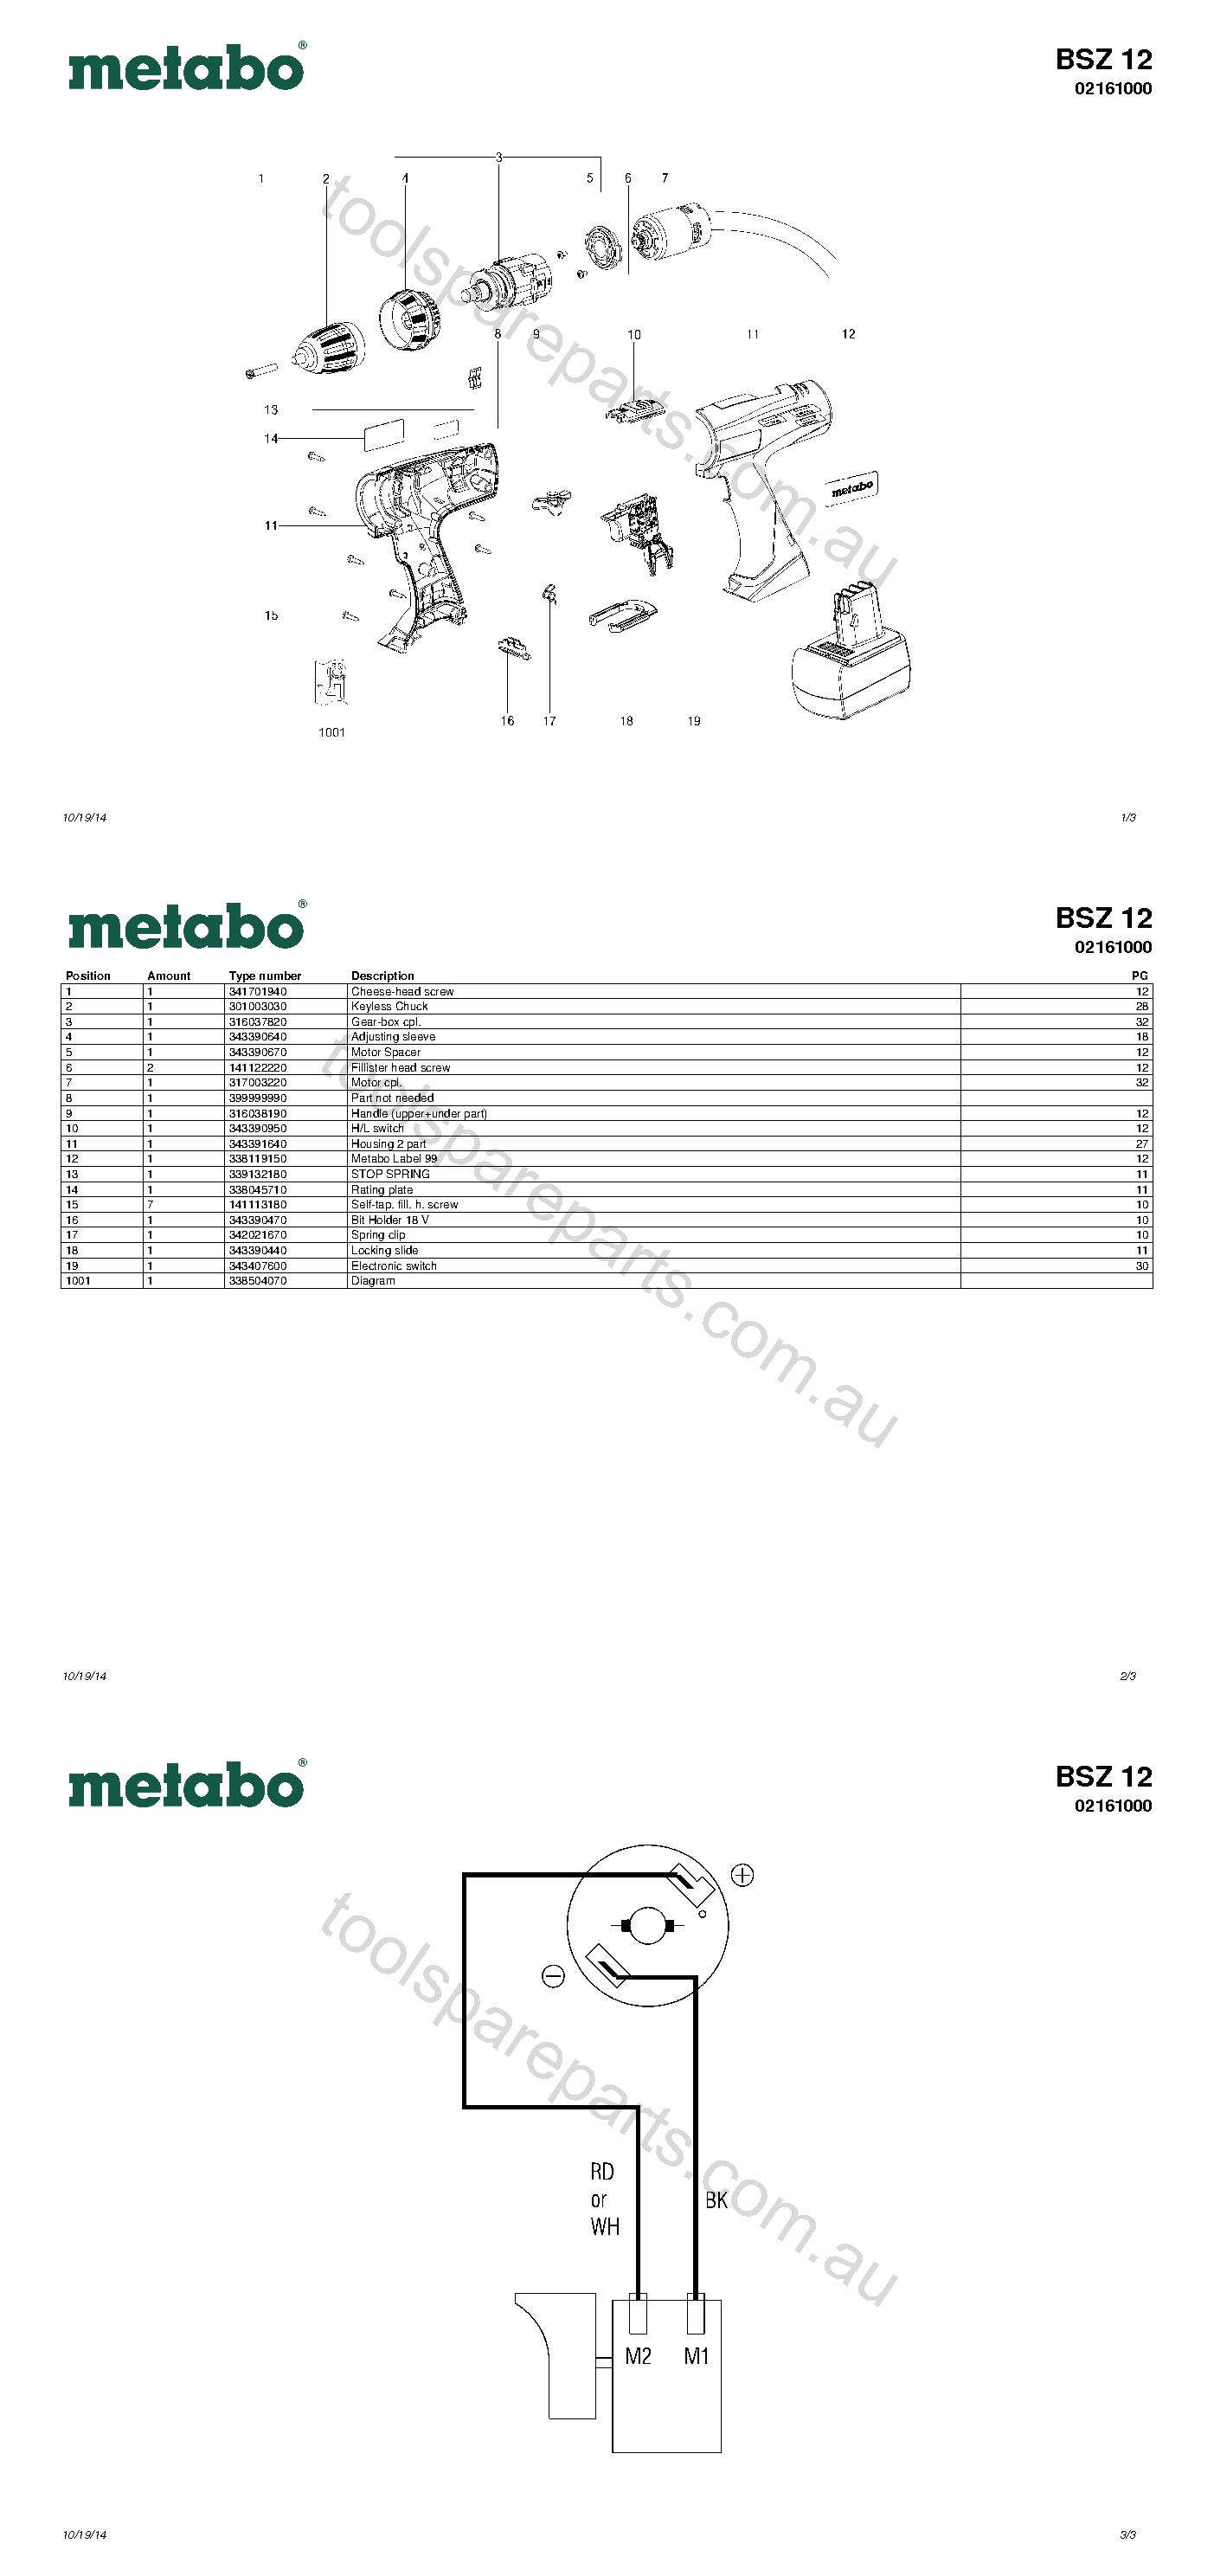 Metabo BSZ 12 02161000  Diagram 1